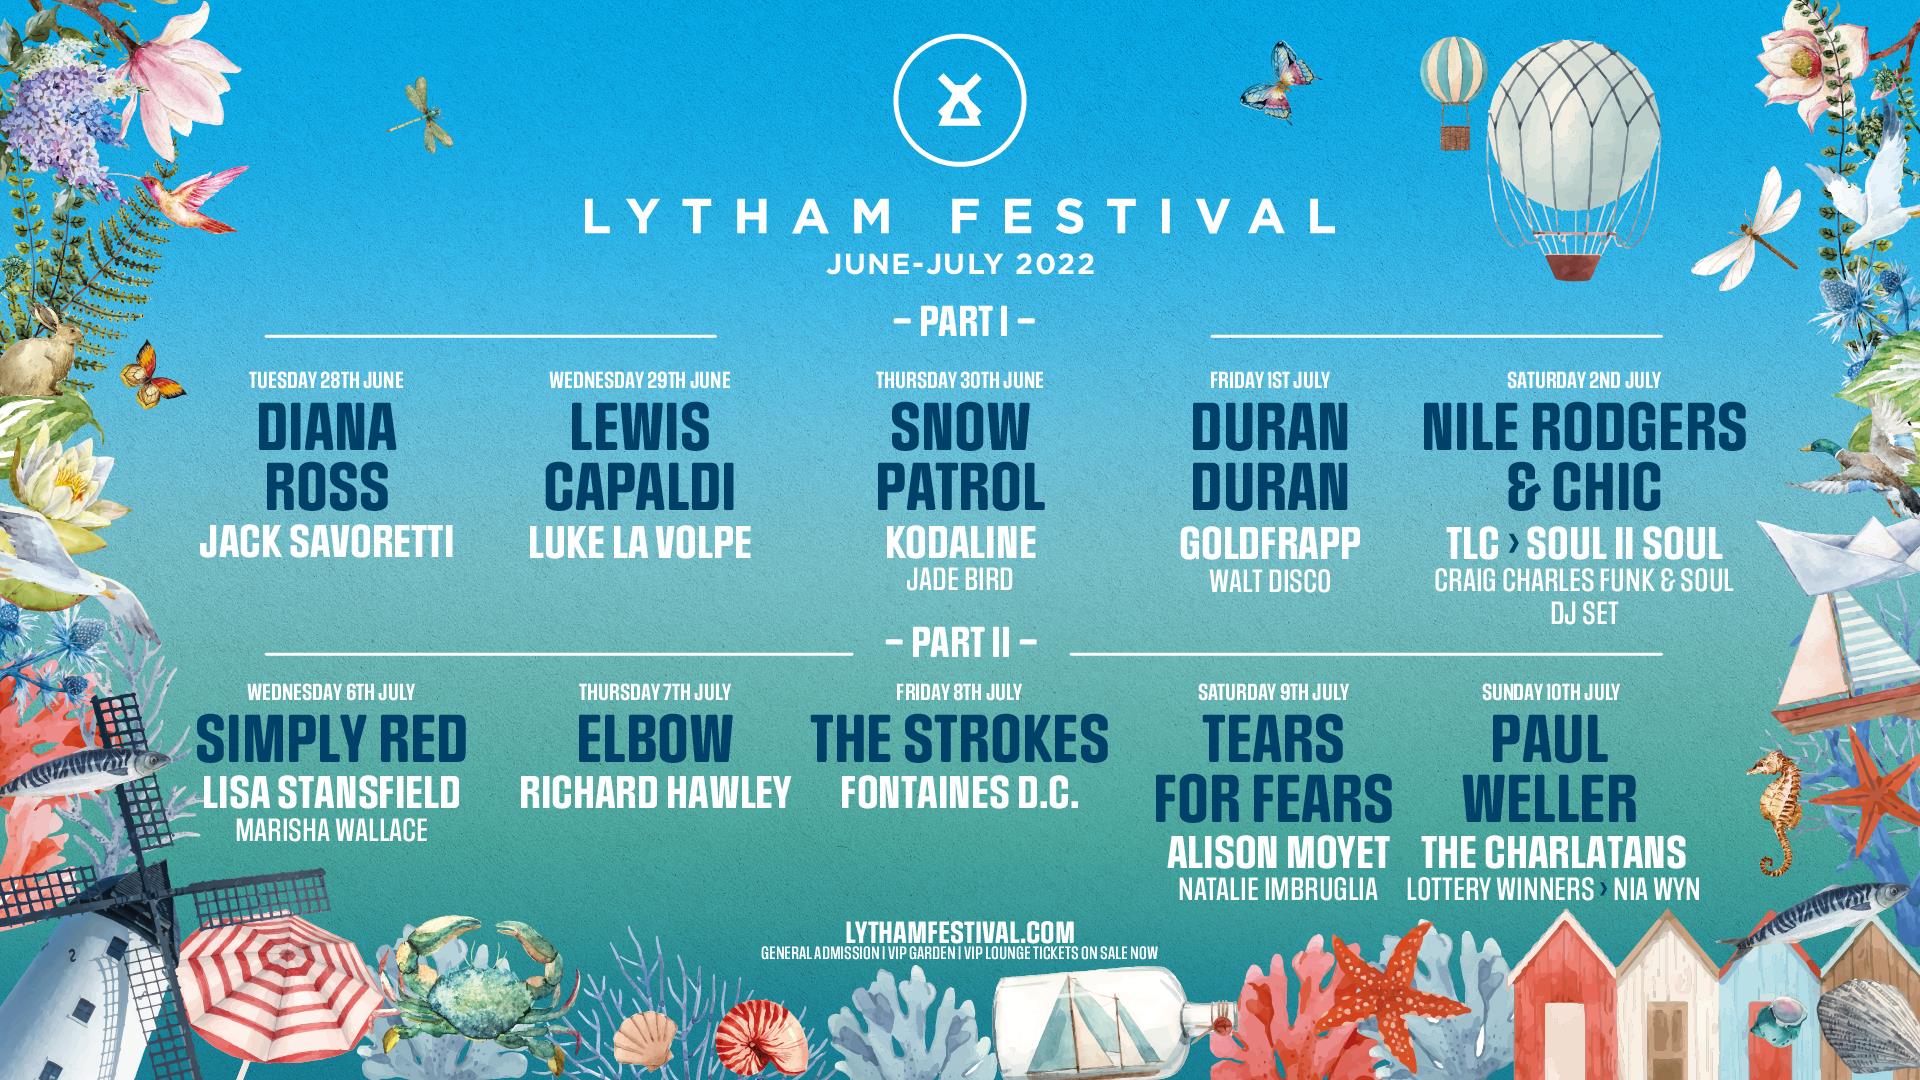 Lytham Festival 2022 – Artist Paul Weller - Lowther Pavilion